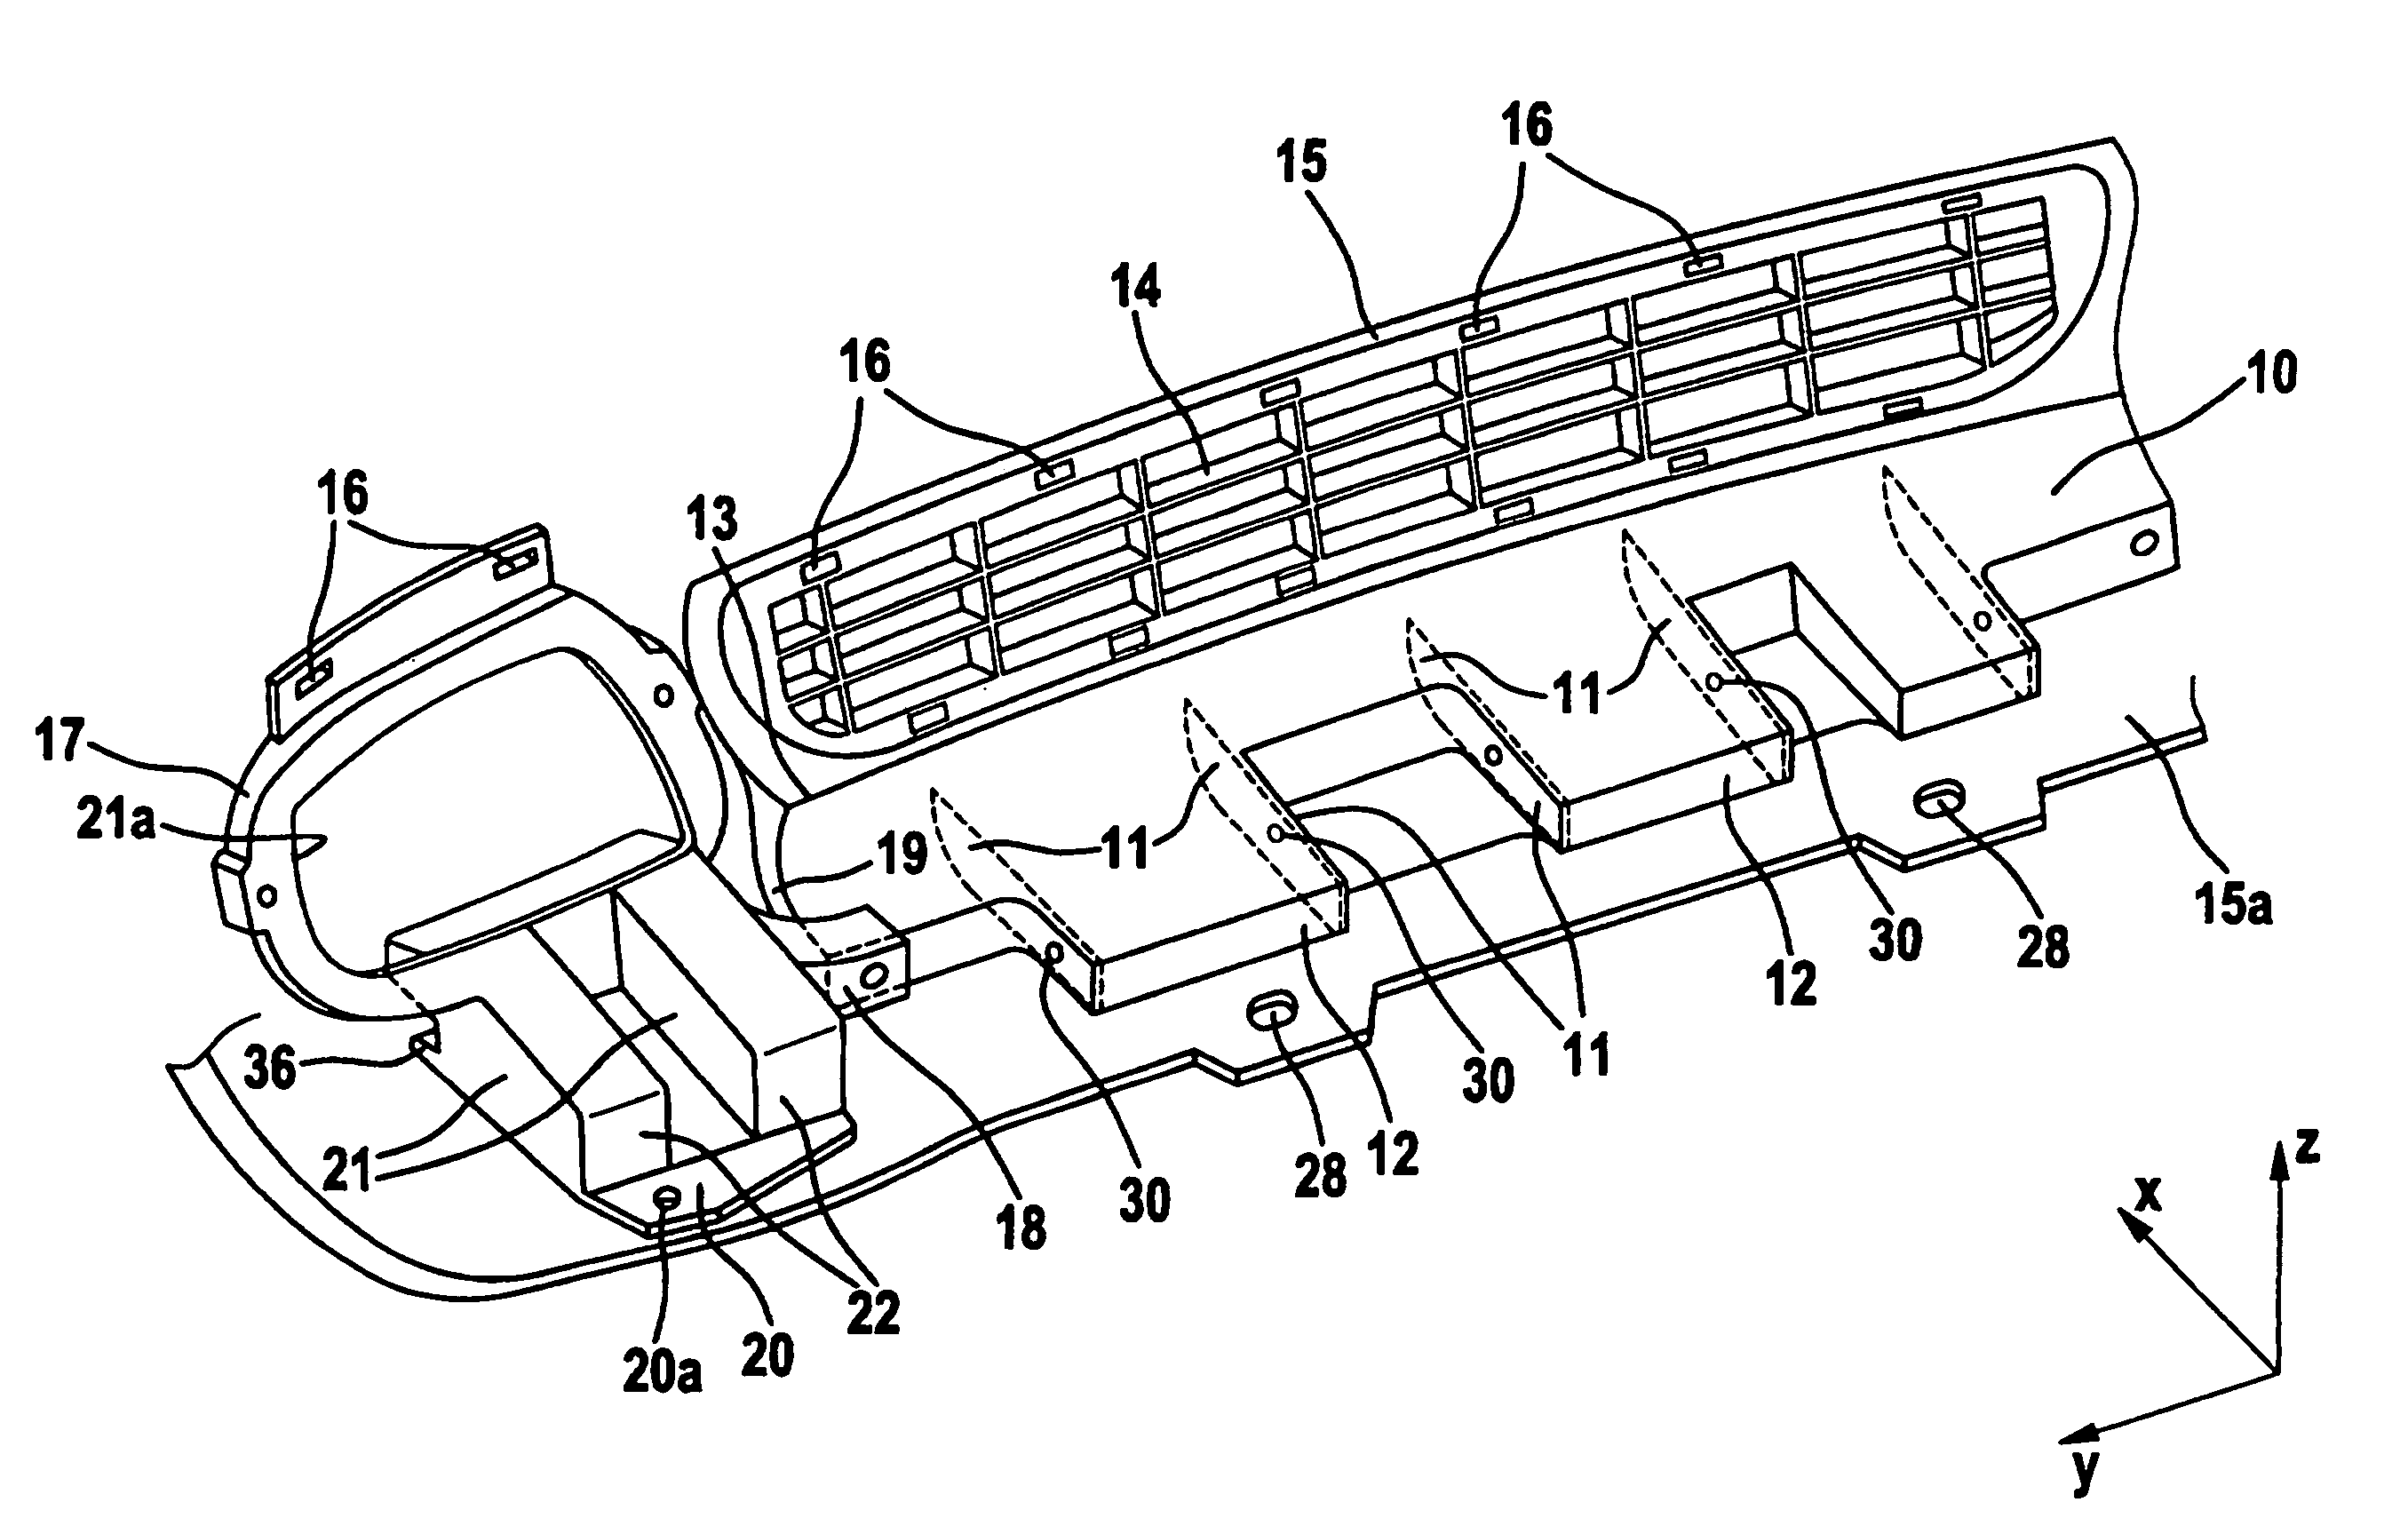 Structural component of a motor vehicle bumper arrangement